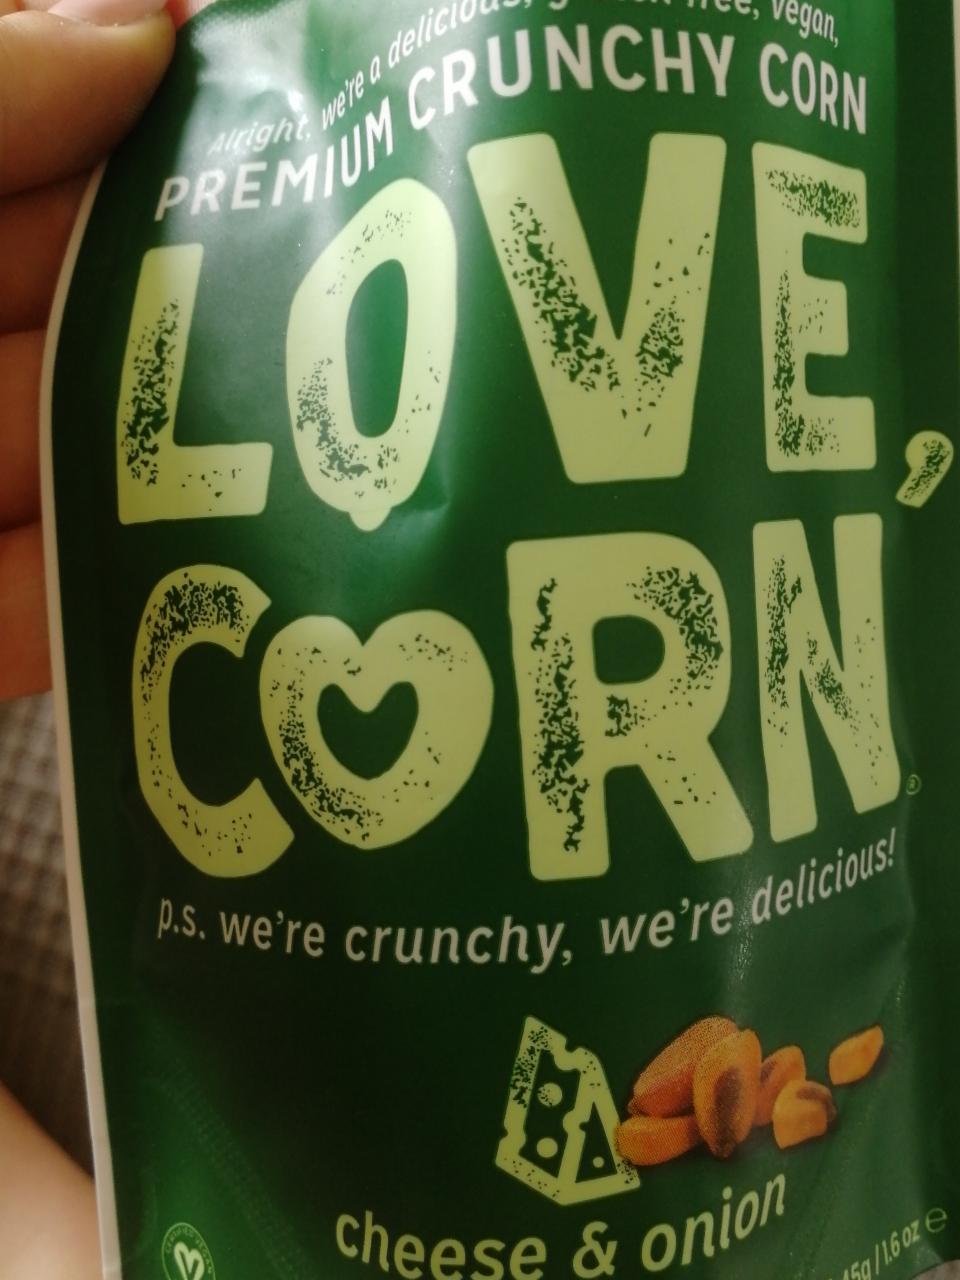 Fotografie - Cheese & Onion Premium Crunchy Corn Love Corn